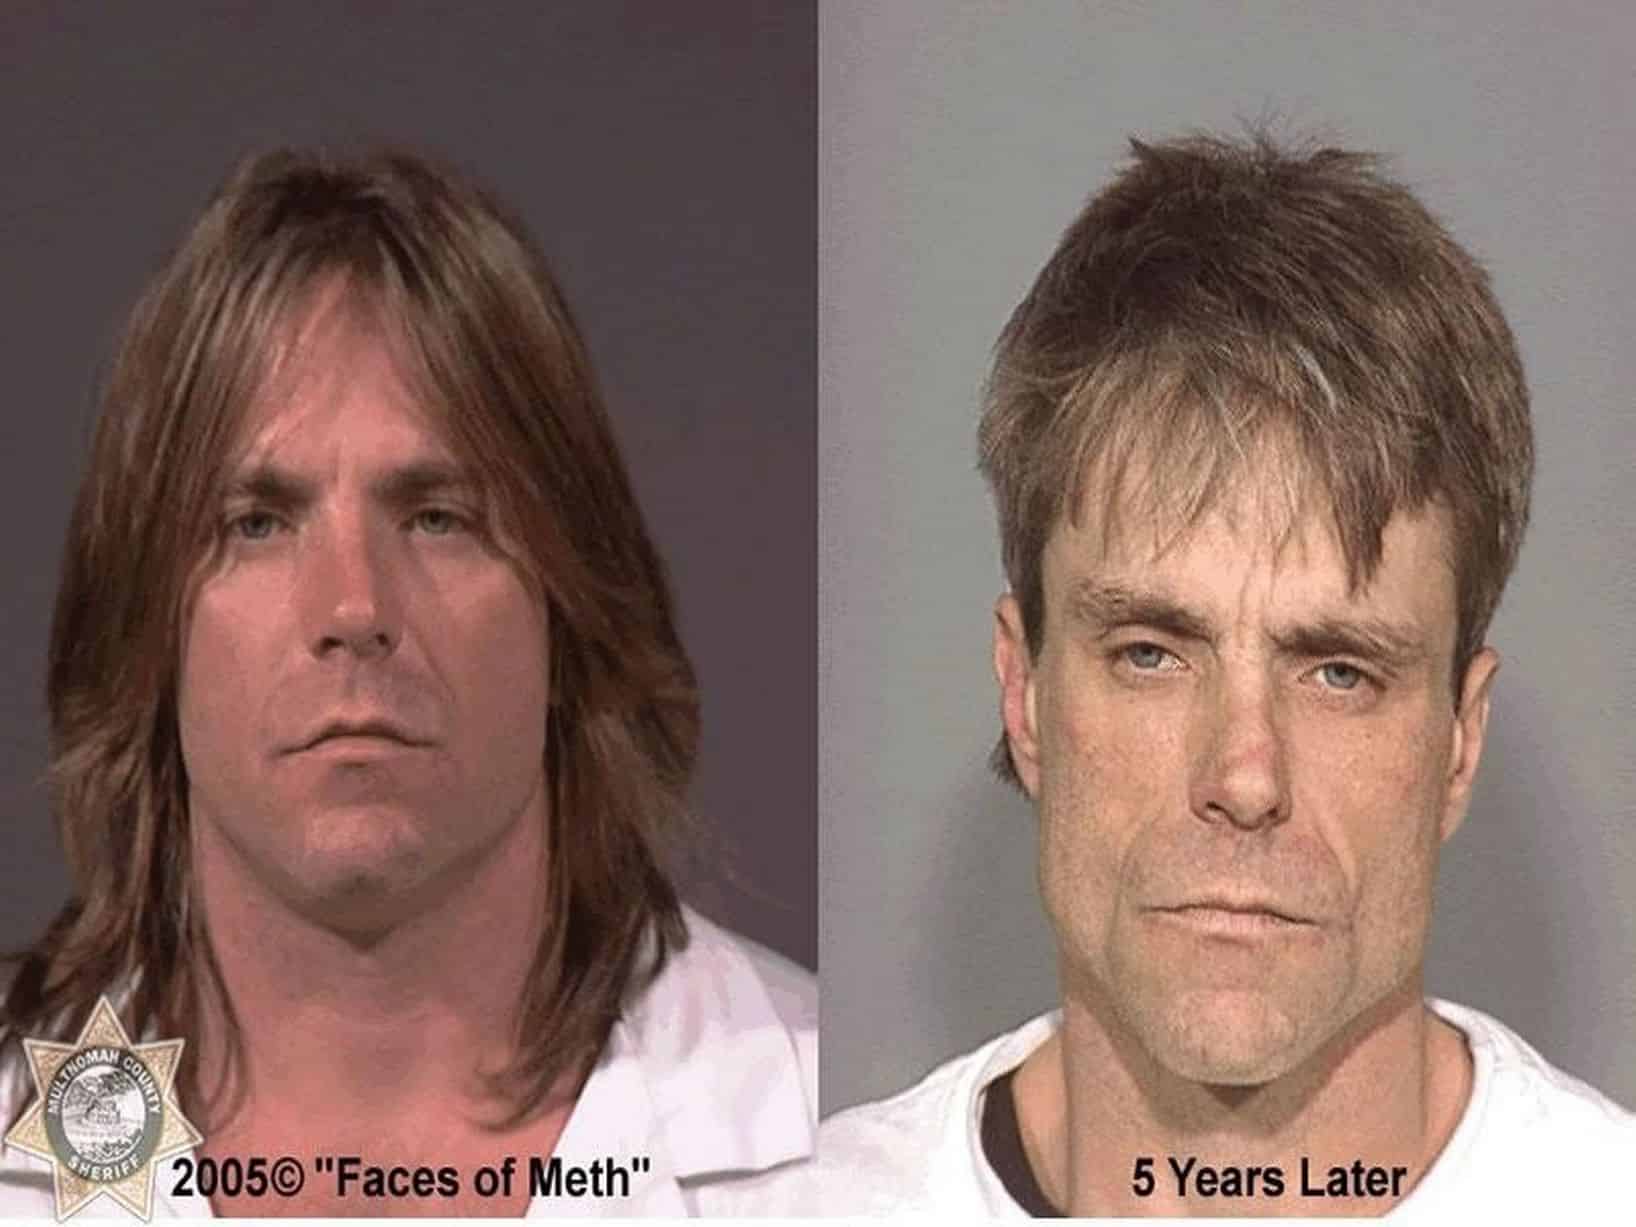 The faces of meth reversed